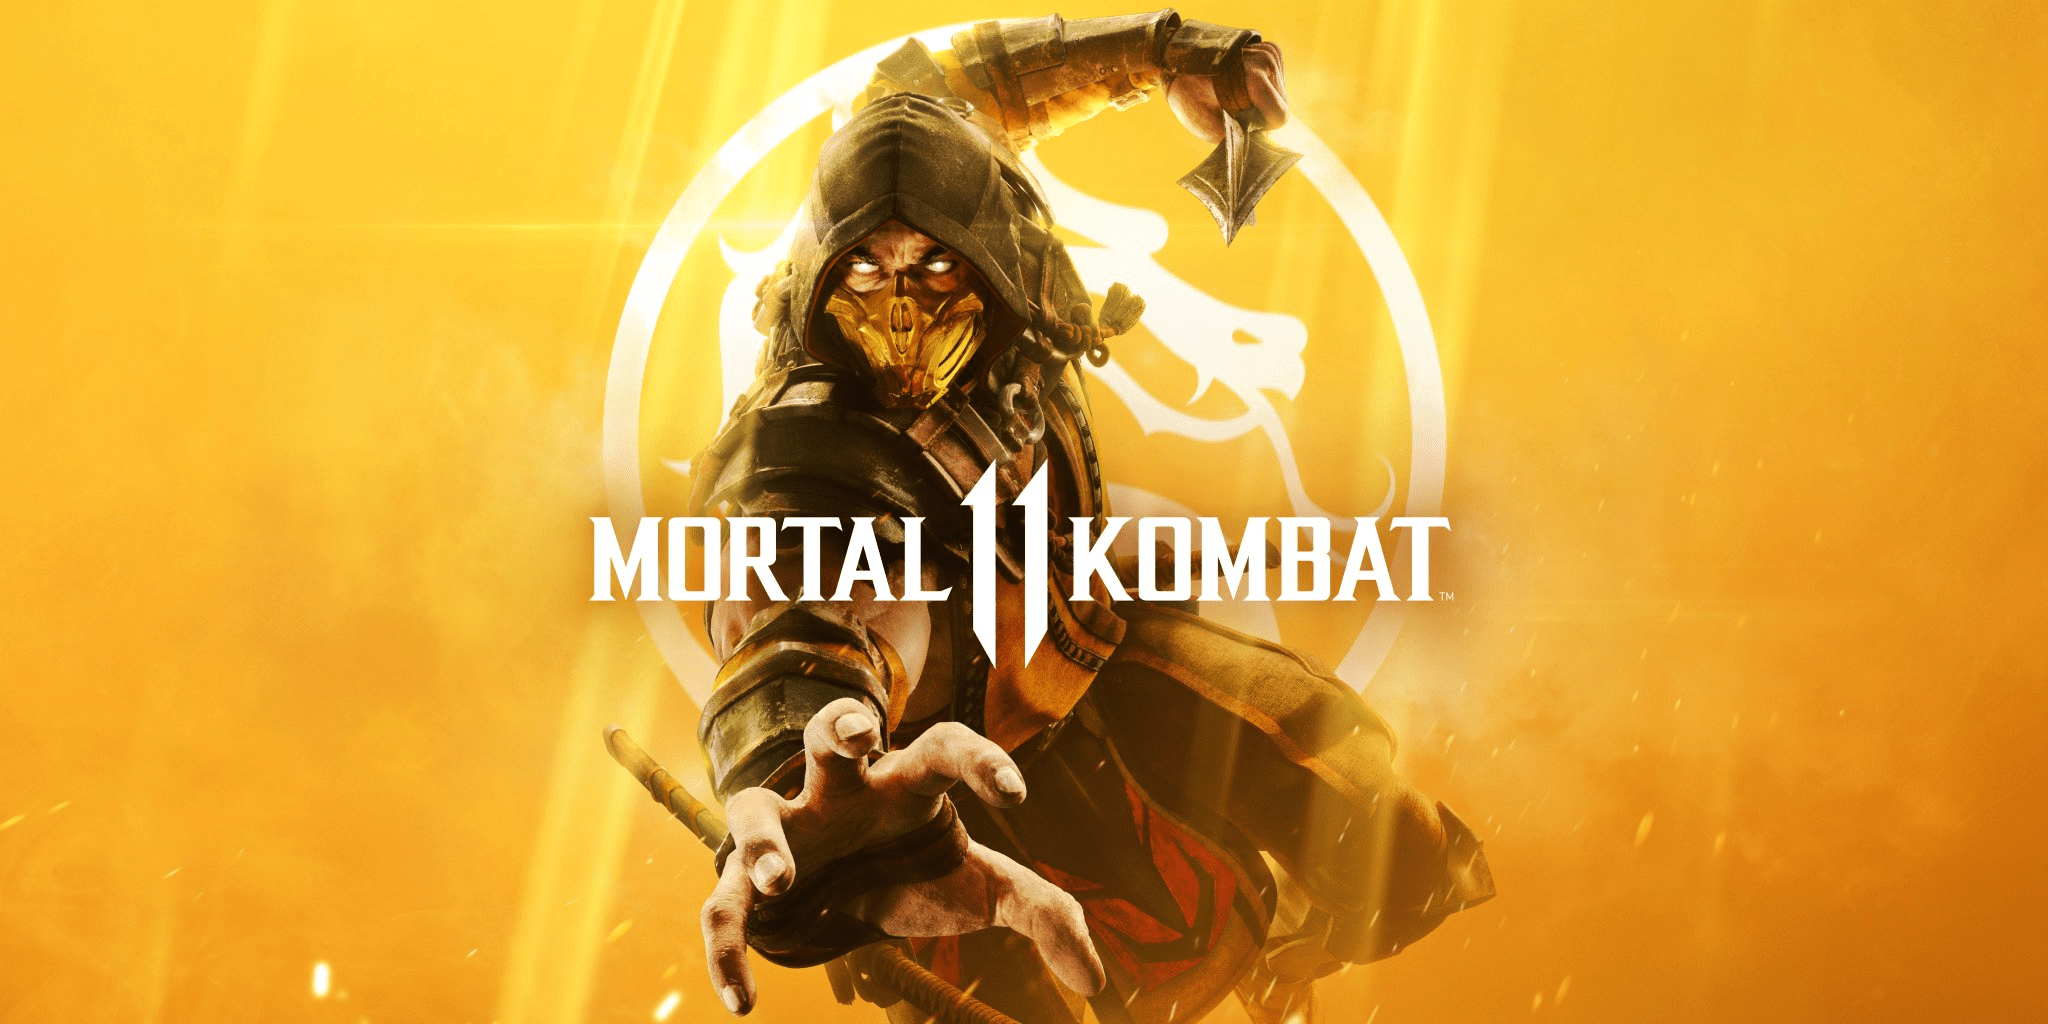 Image The 'Mortal Kombat 11' Cover Art